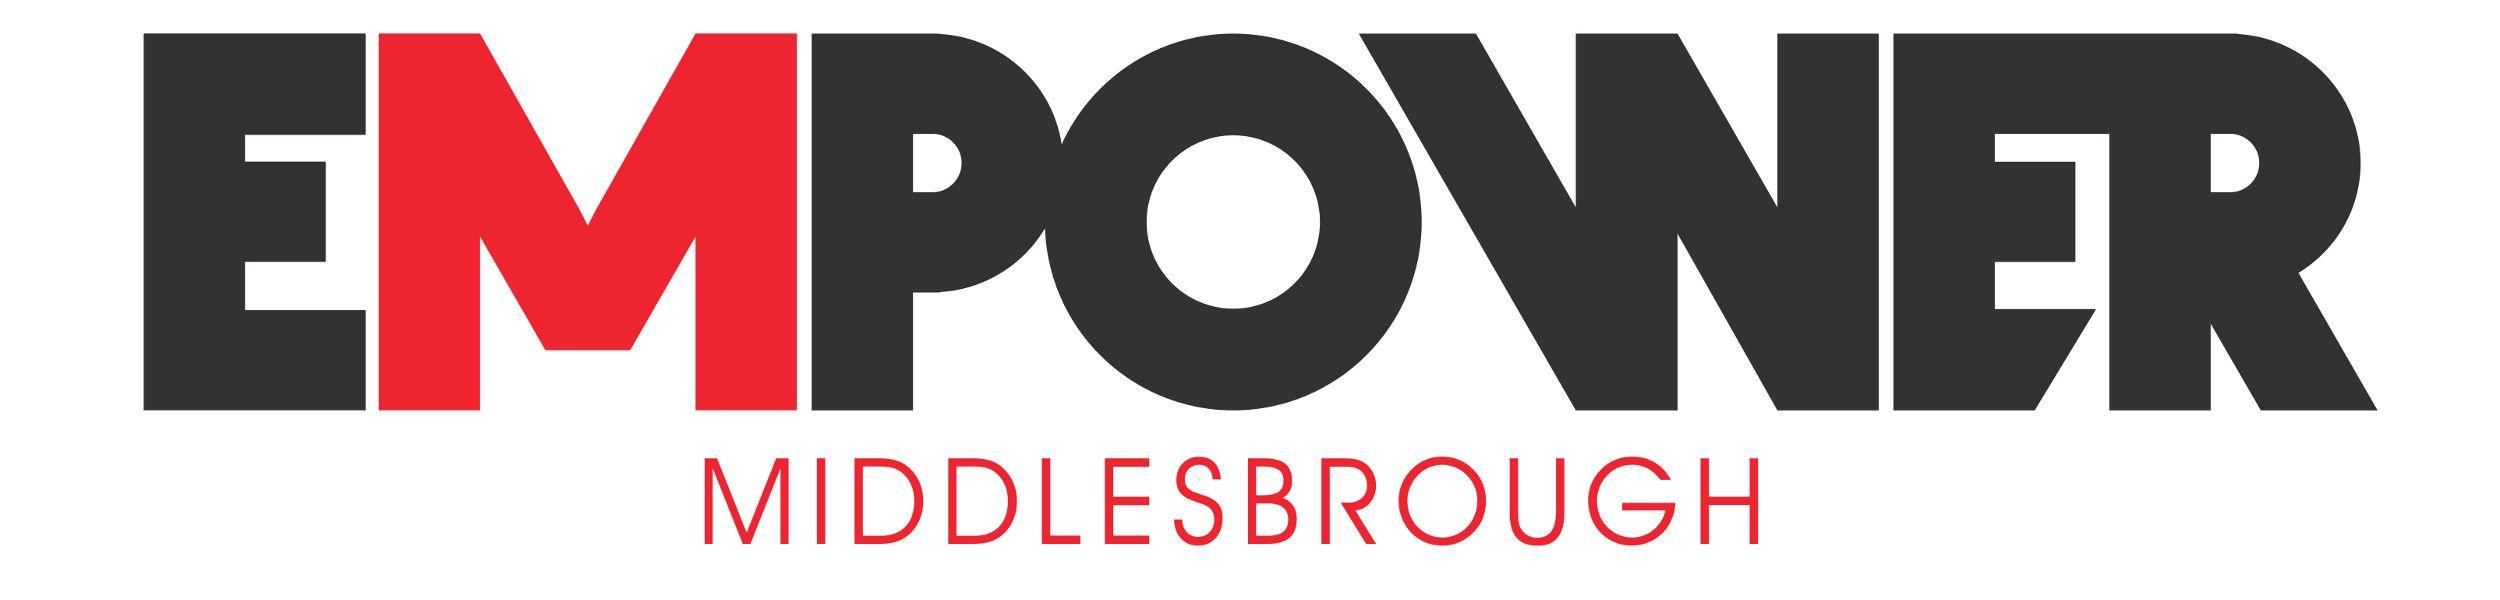 Empower Logo - EMPOWER | Middlesbrough Council